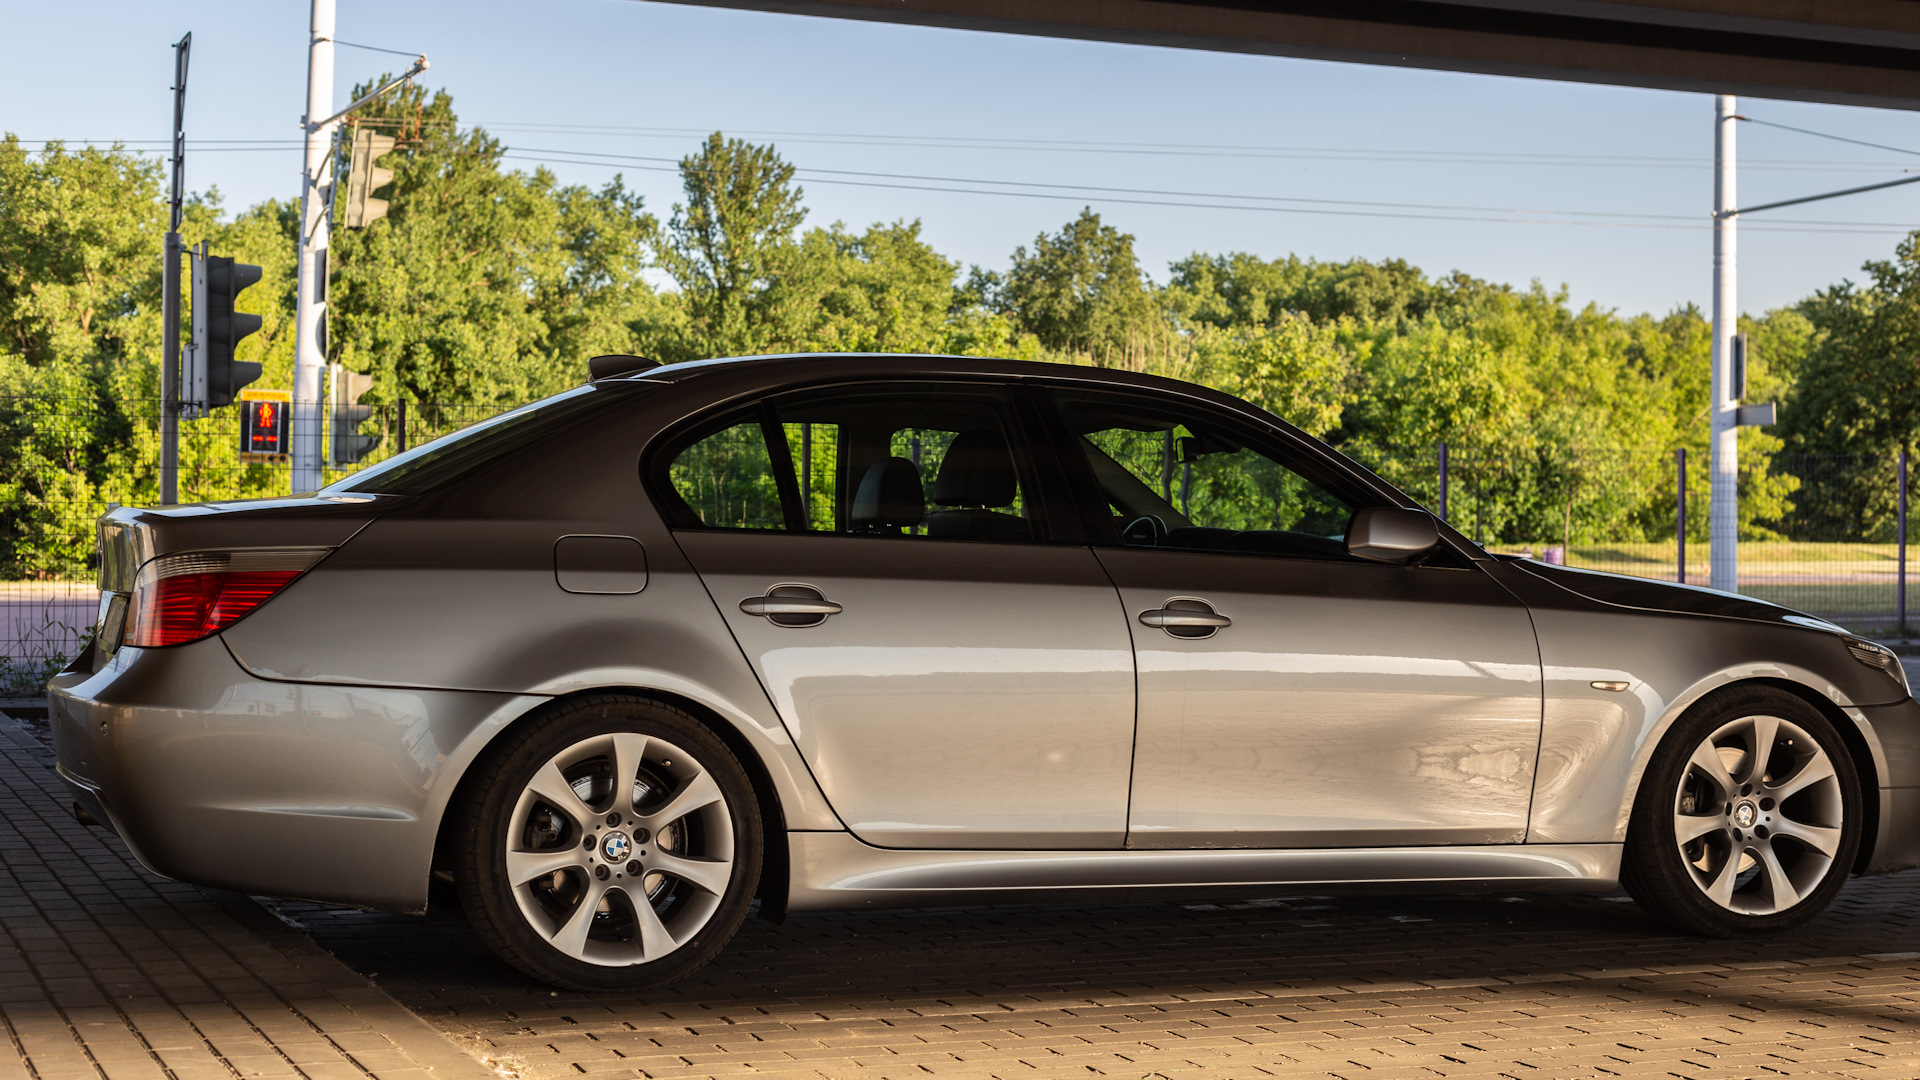 E60 E60 - комплект подвески катушки для BMW 5 серии E60 купить в